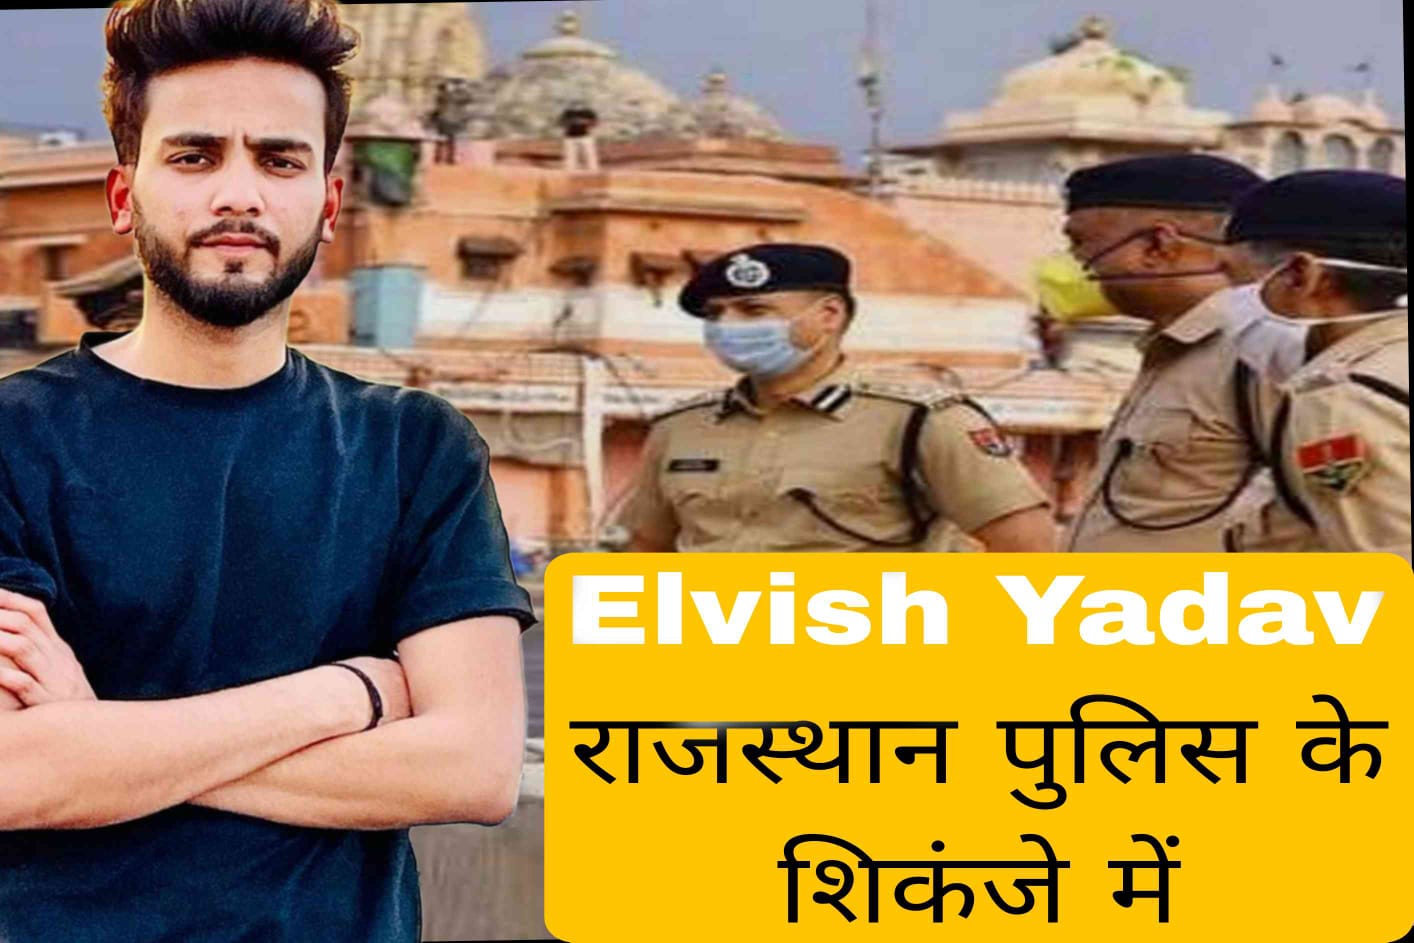 Rajasthan Police's grip on Elvish Yadav